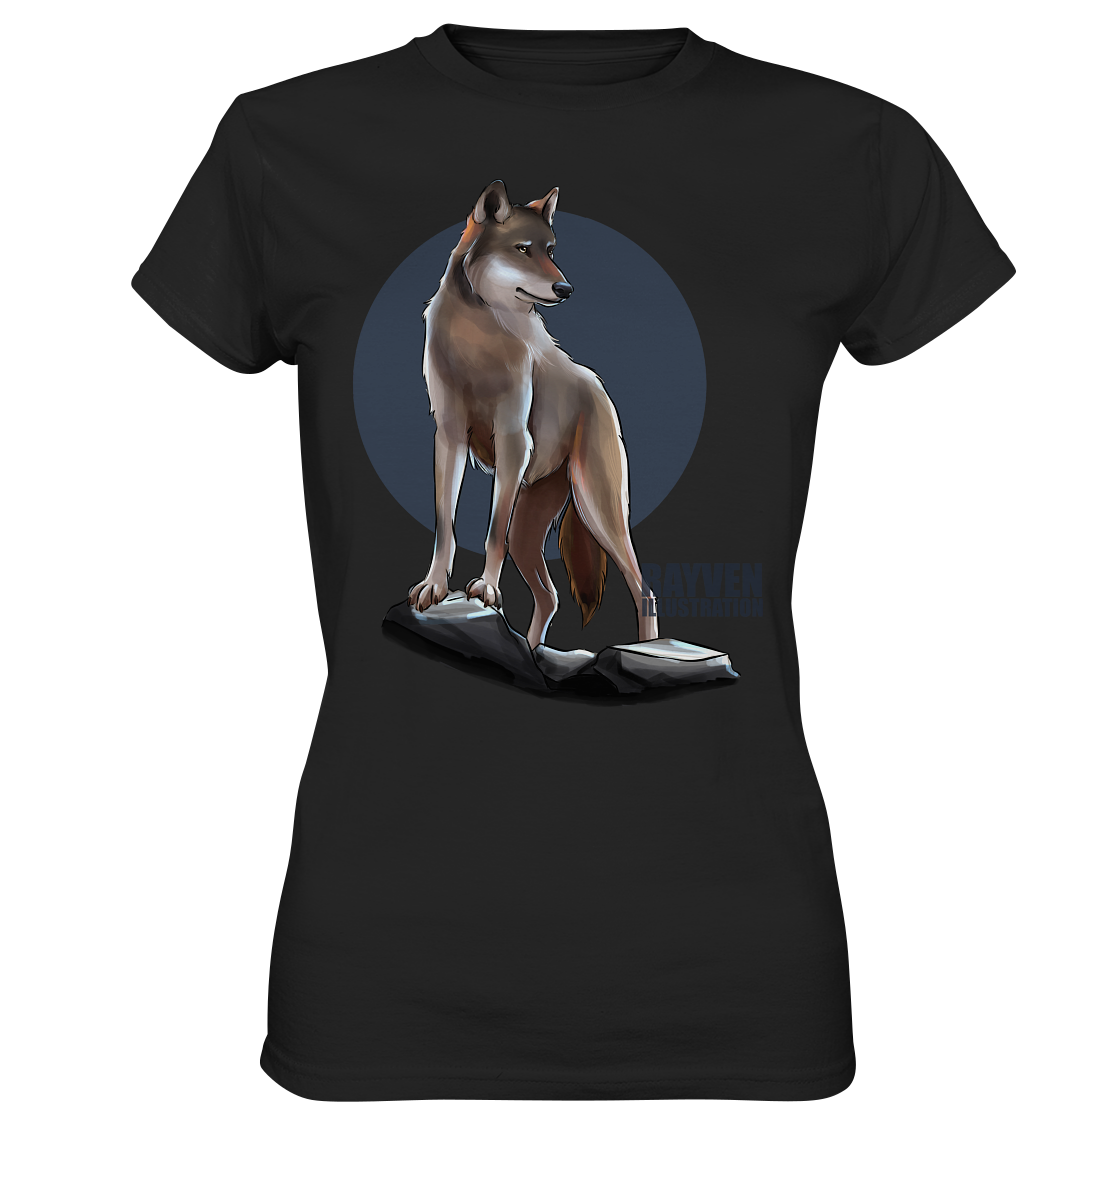 Rayven Illustration | Wolf - Ladies Premium Shirt